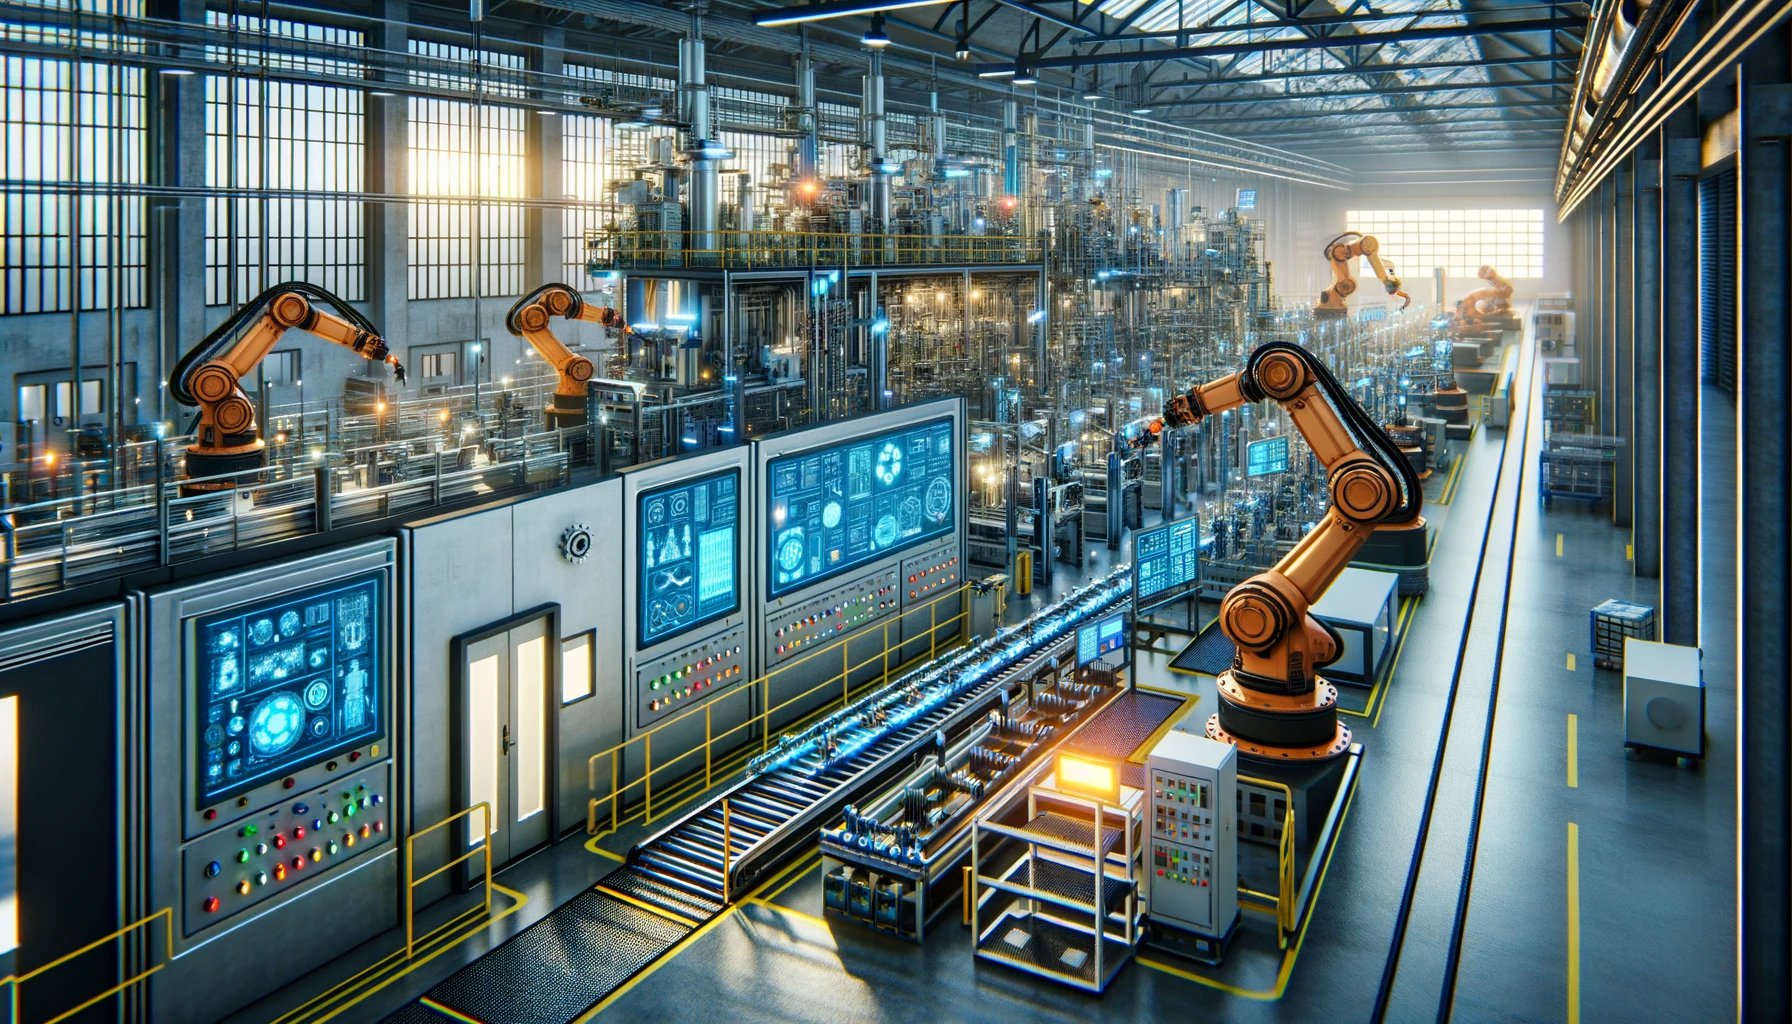 Ilustrasi Pemanfaatan Teknologi Otomasi Industri | Nando Rifky (Generated by AI)